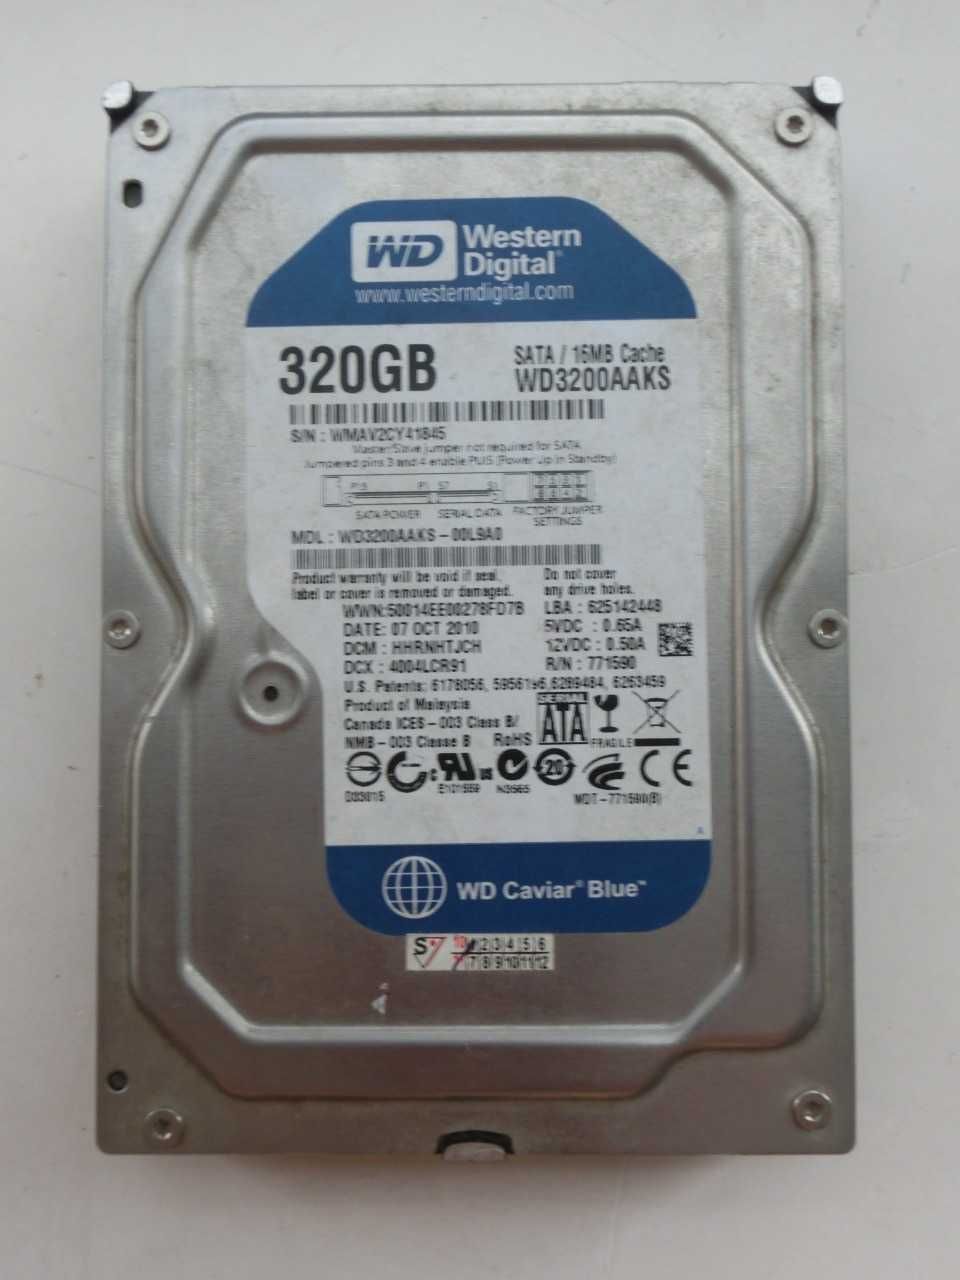 Жёсткий диск 320GB, Western Digital, SATA/16mb cache